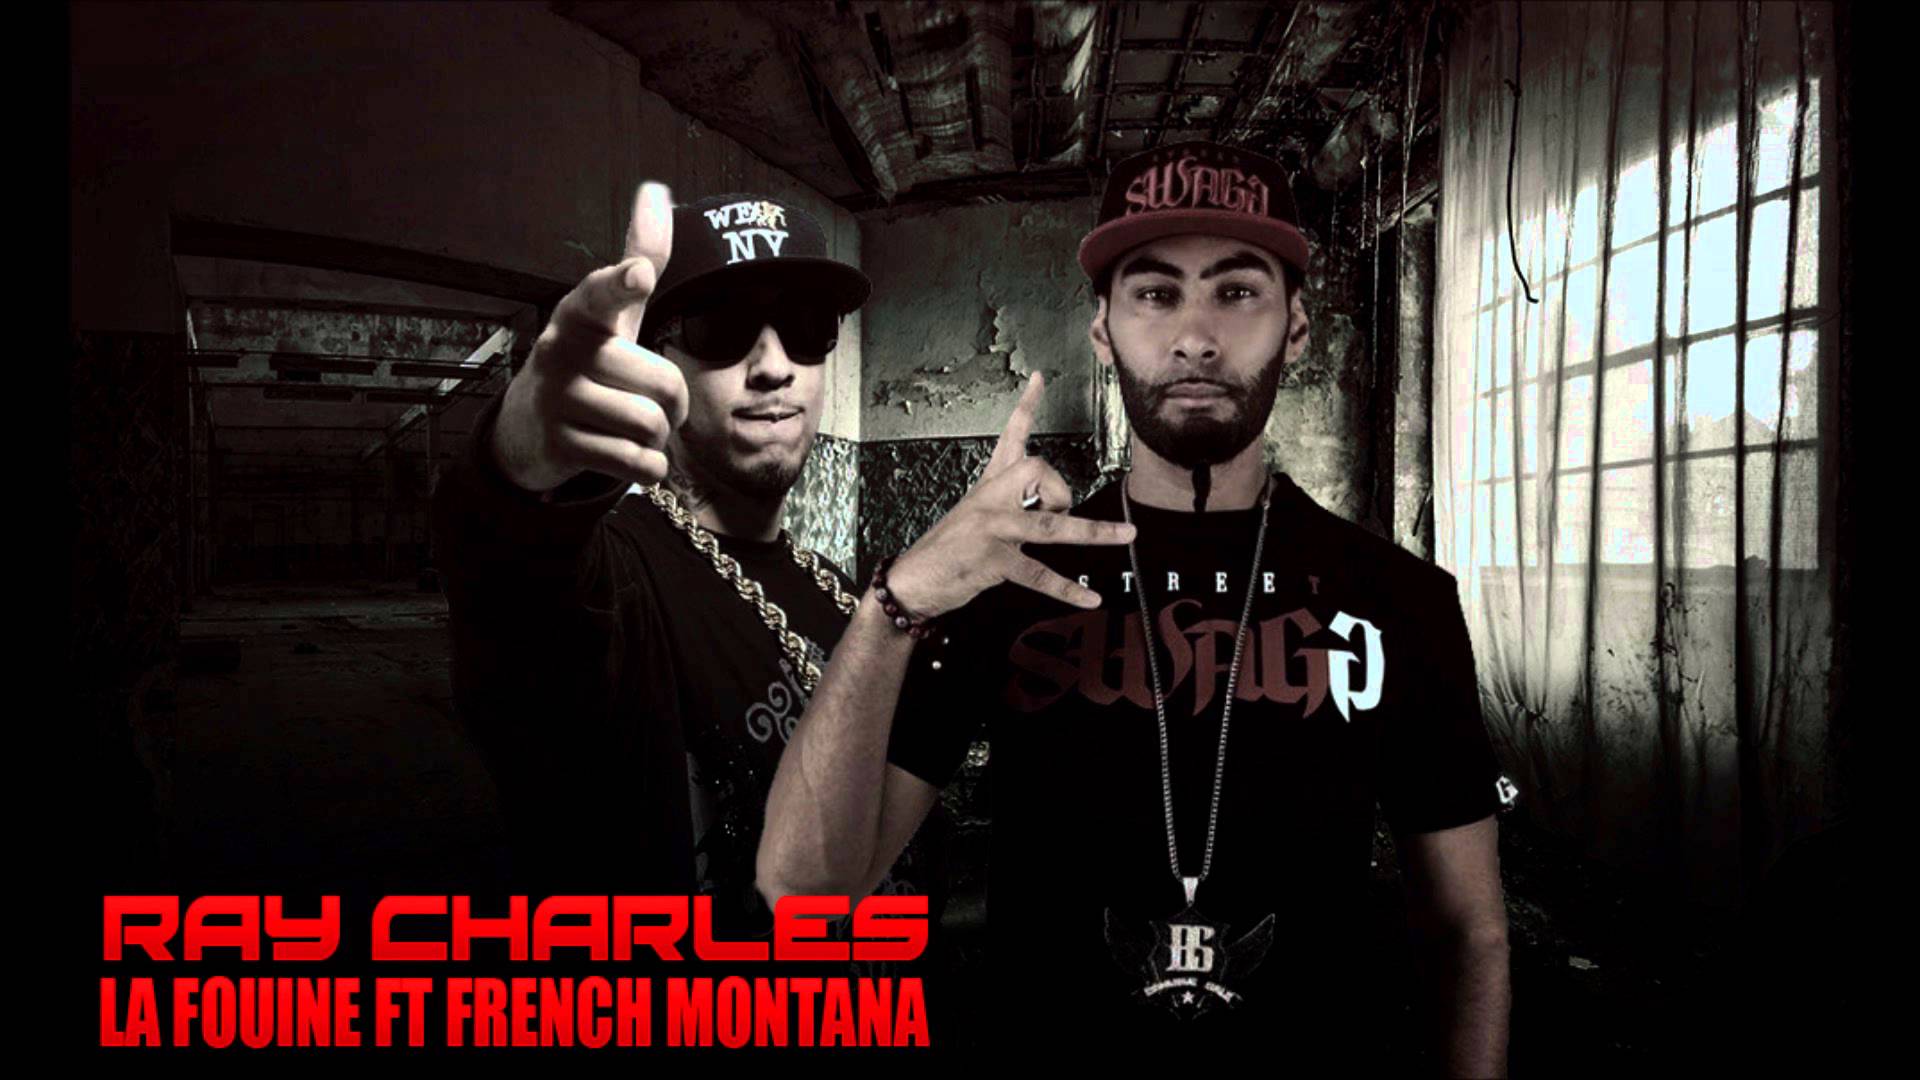 La fouine ft French Montana - Ray Charles ( 2013 ' HD ' ) - YouTube